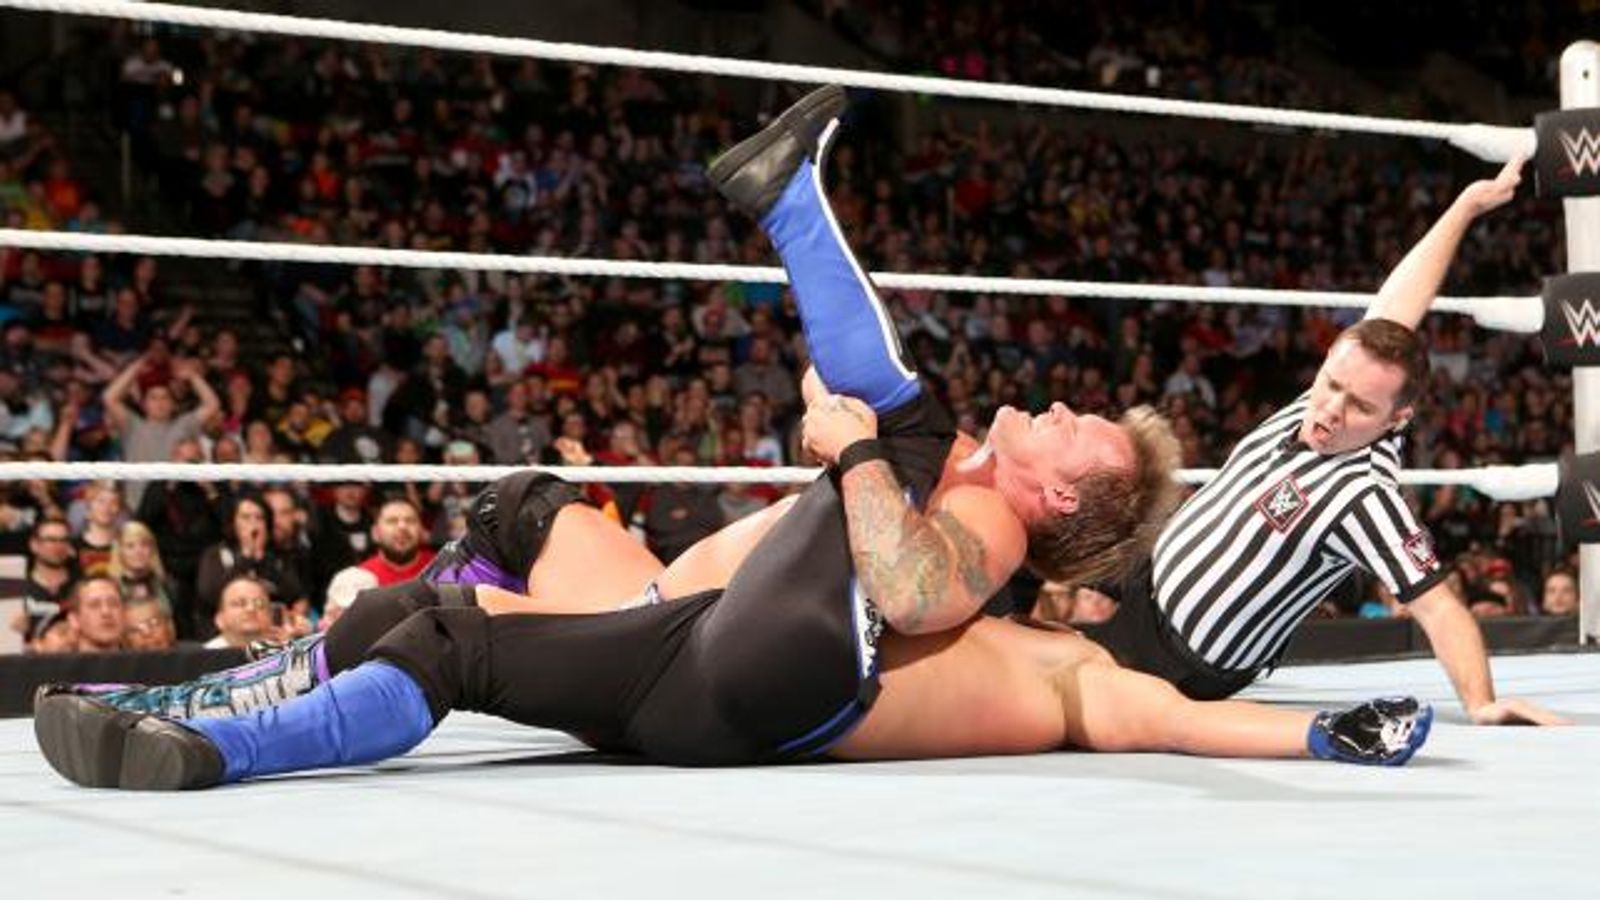 Wwe Smackdown Chris Jericho Beats Aj Styles In Rematch Wwe News